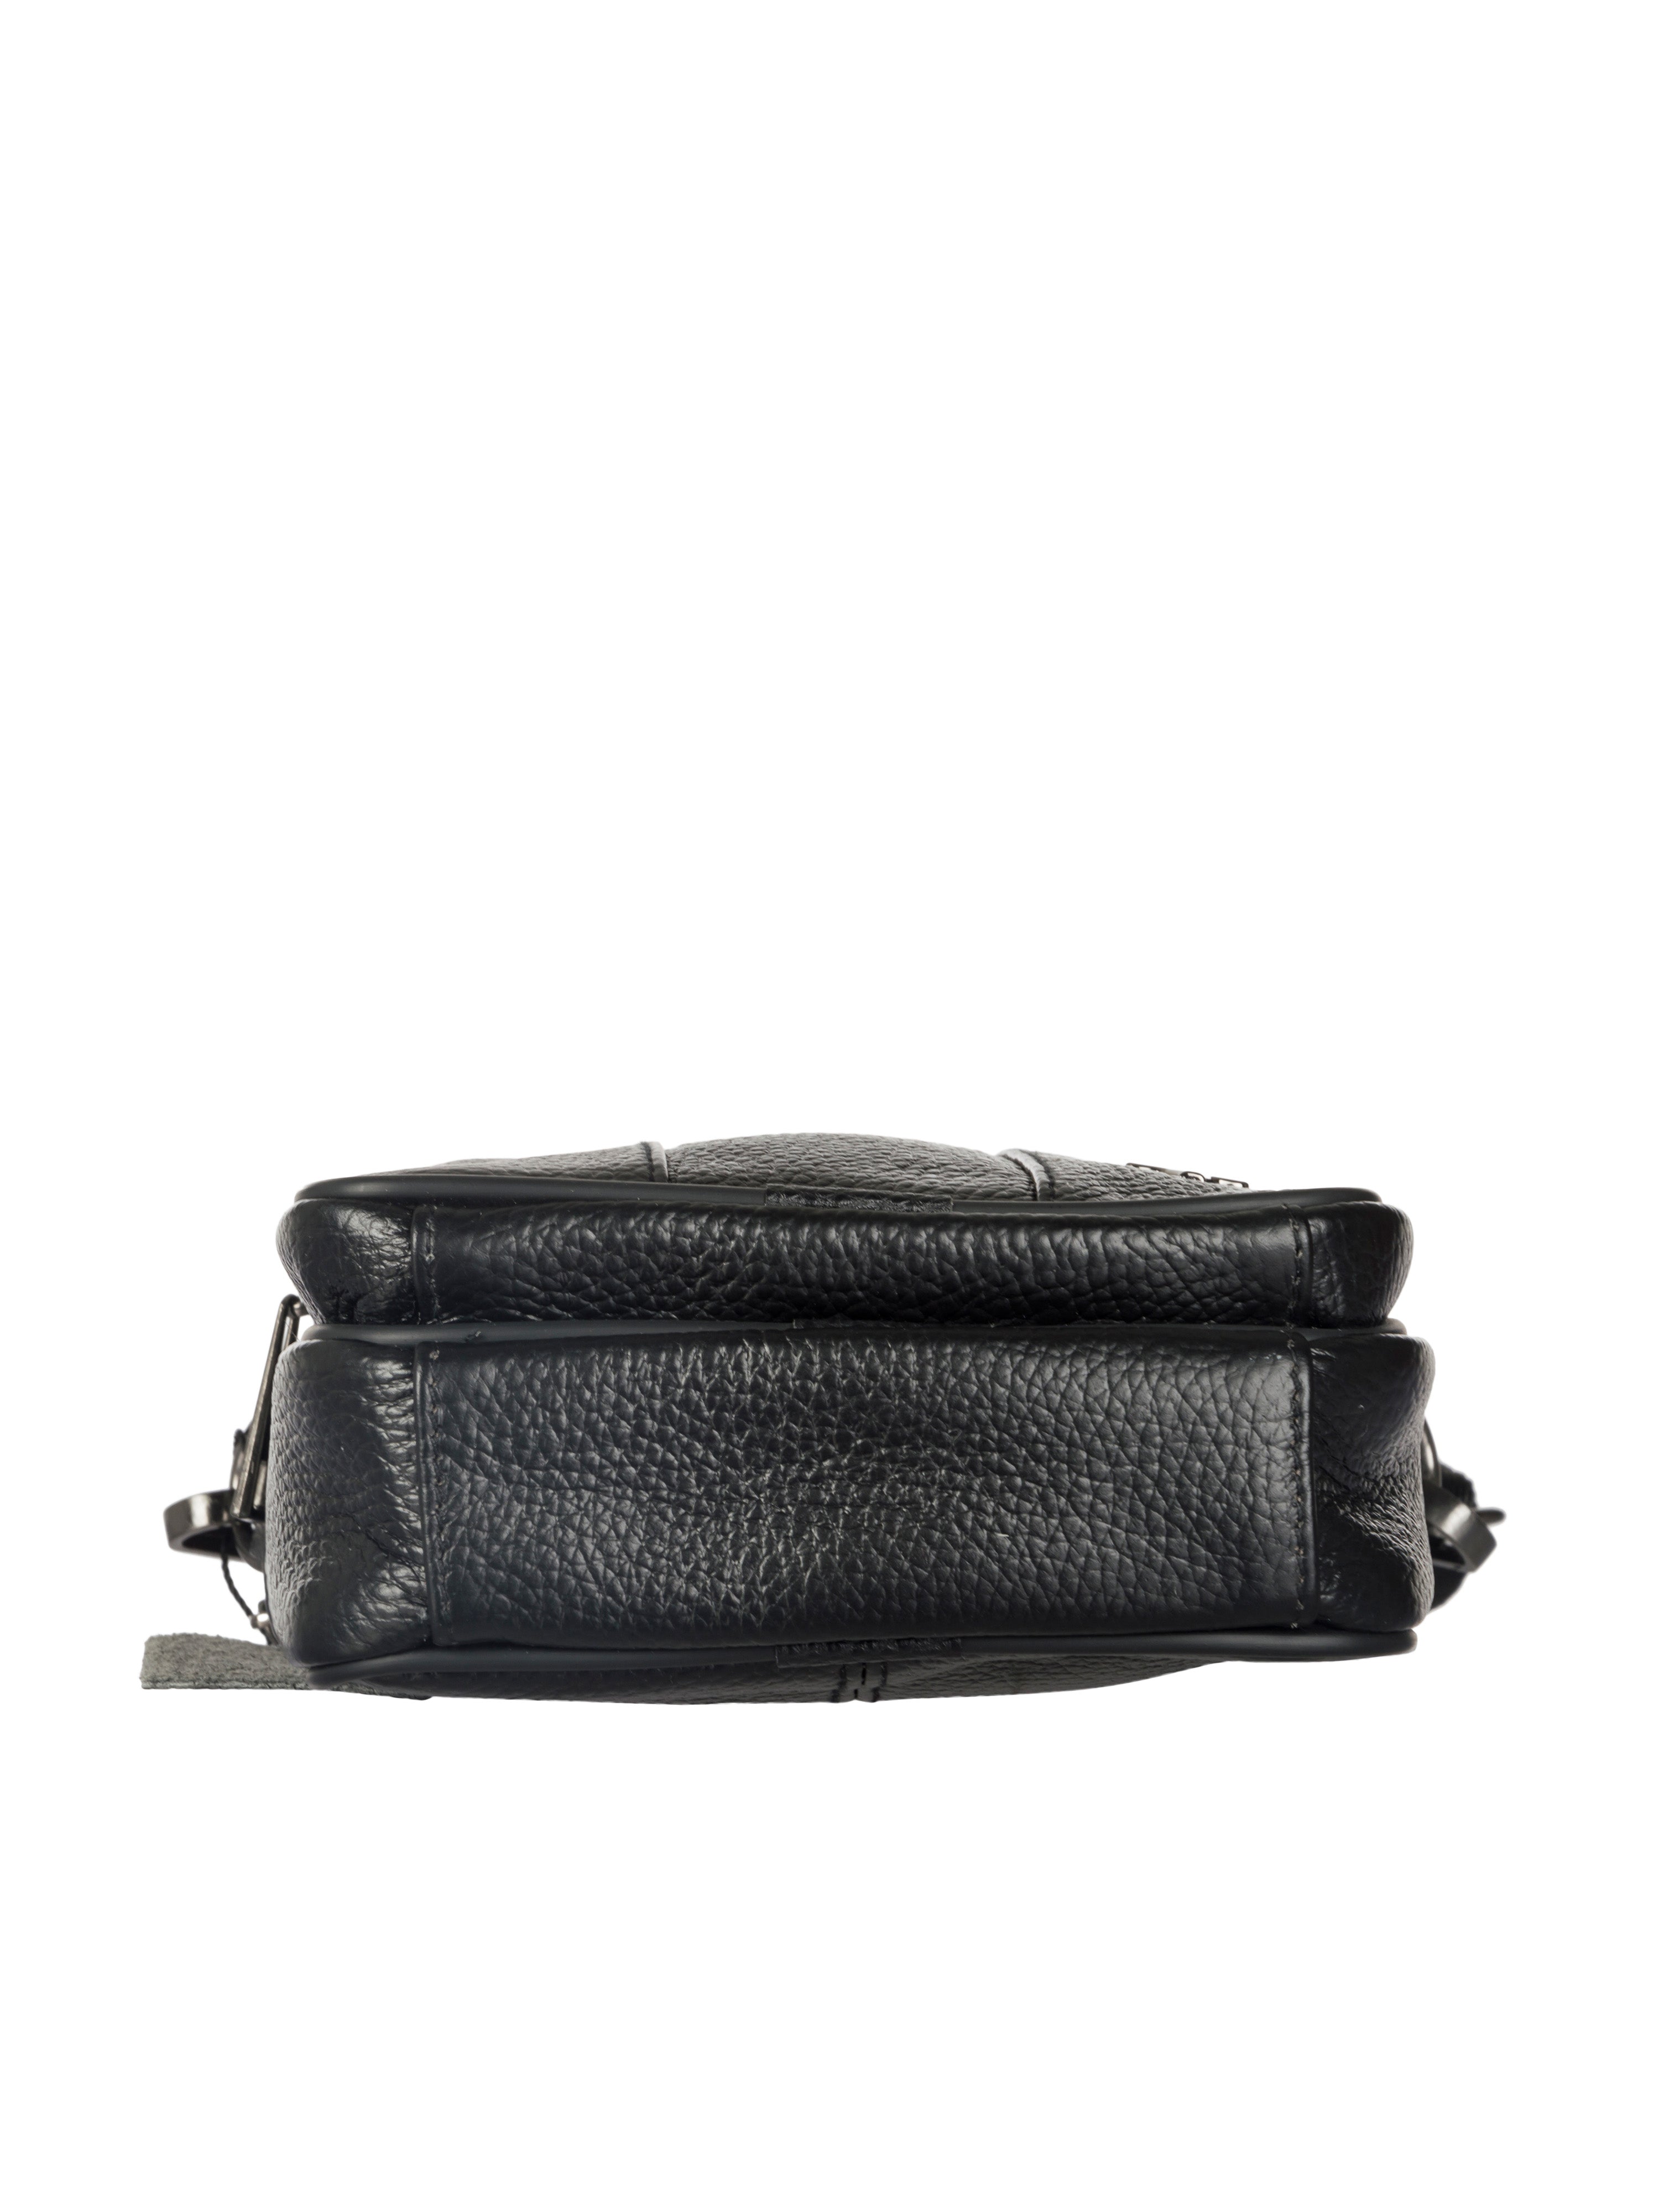 Bulchee Unisex Black Sling Bag - TMHBLD5115.1-18